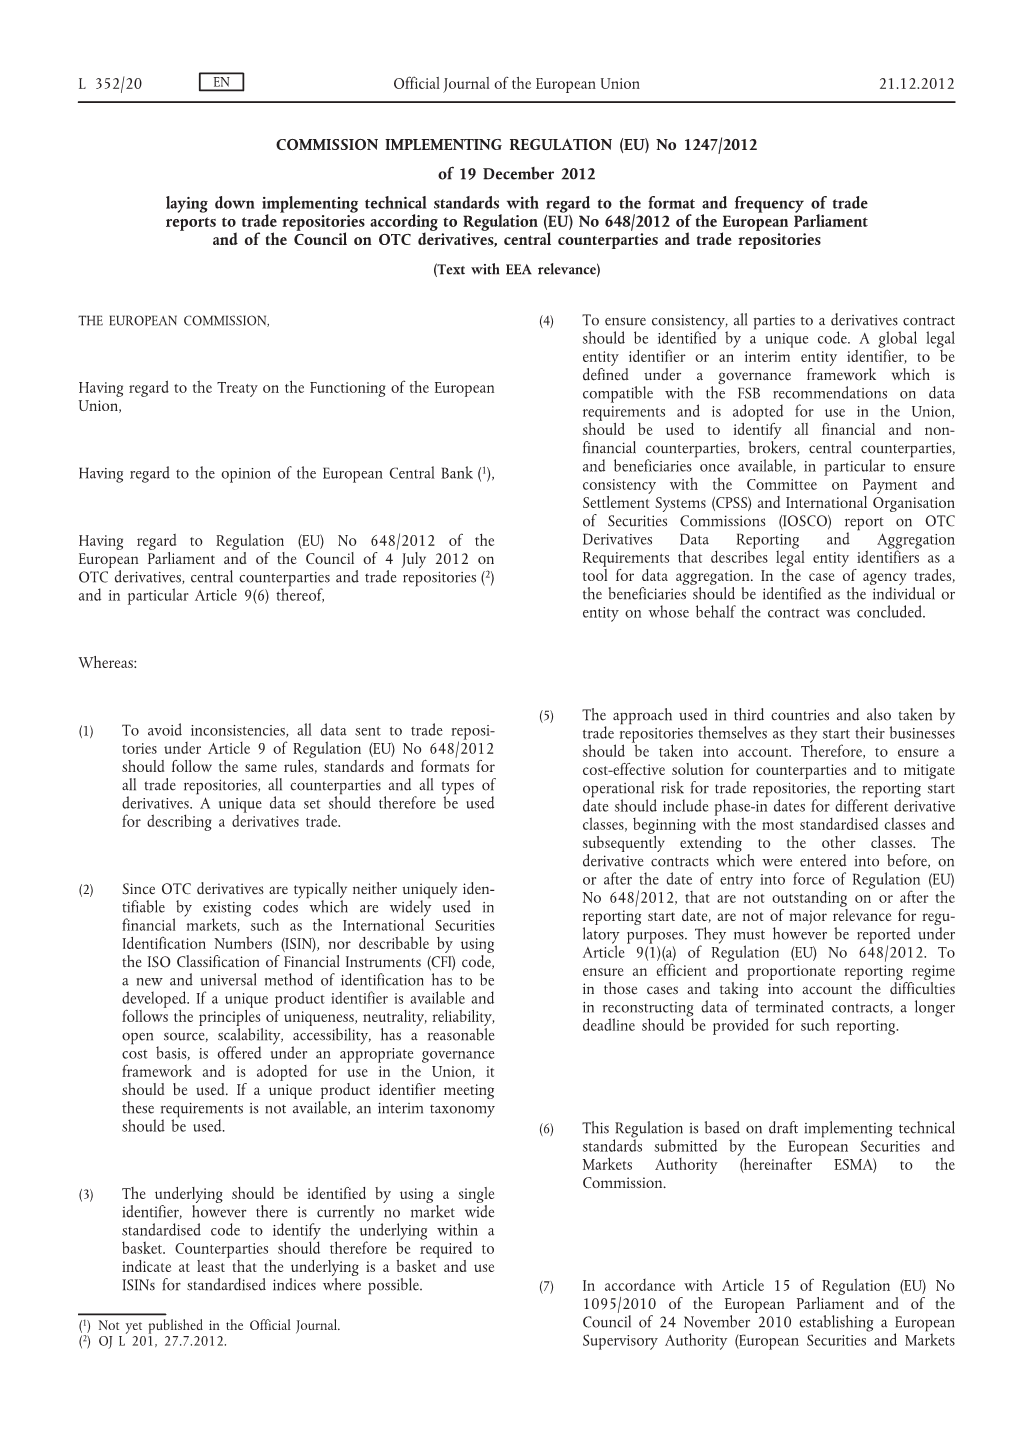 Commission Implementing Regulation (EU) No 1247/2012